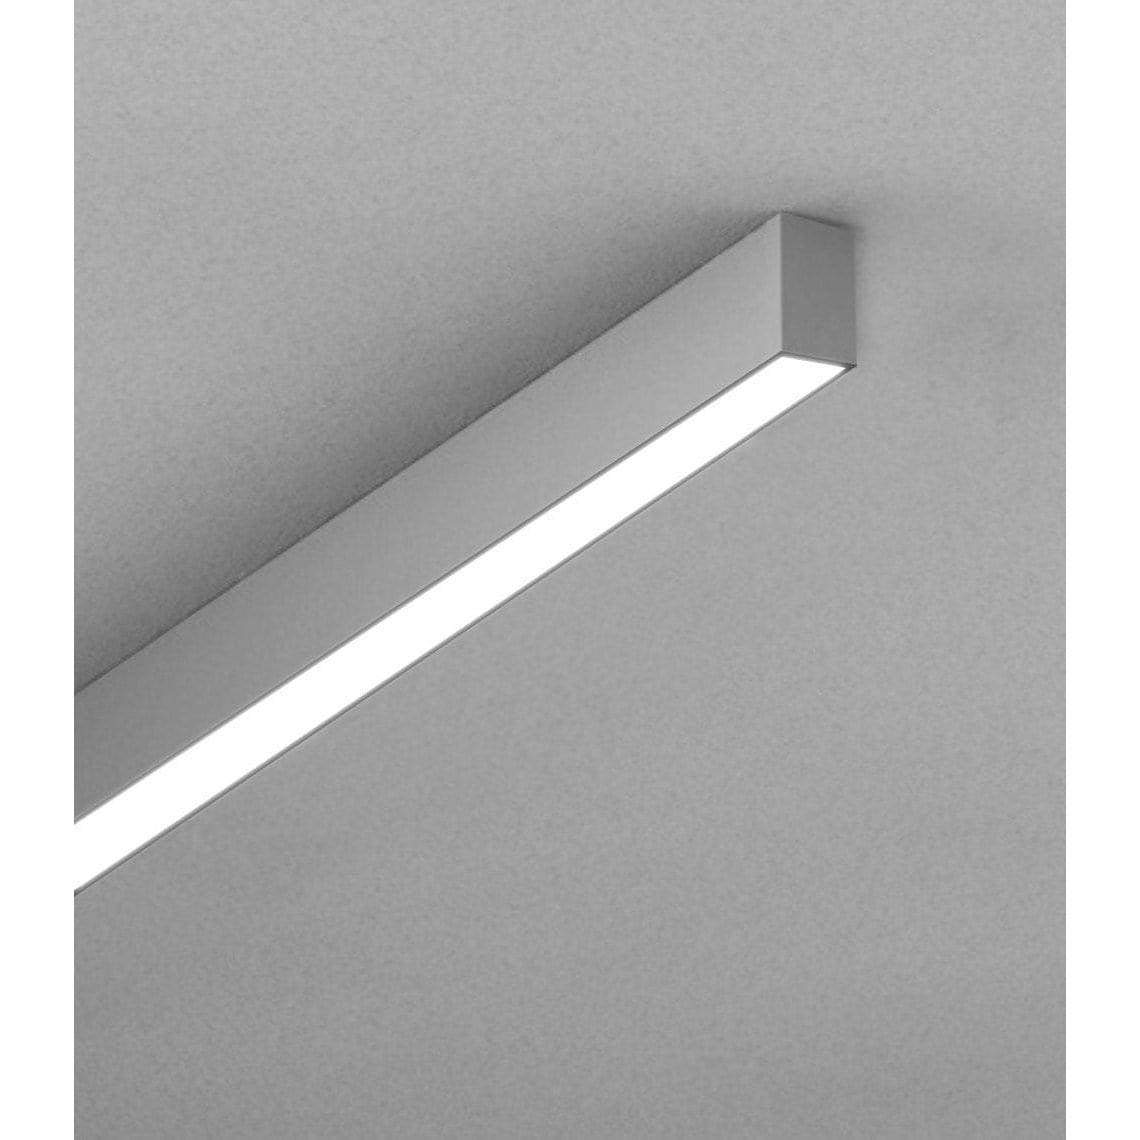 POE Texas Lighting Denton Suspended Linear PoE Lights - Sample 1.3" x 8' Linear Diffuser 8 ft, 5000K (Wall)